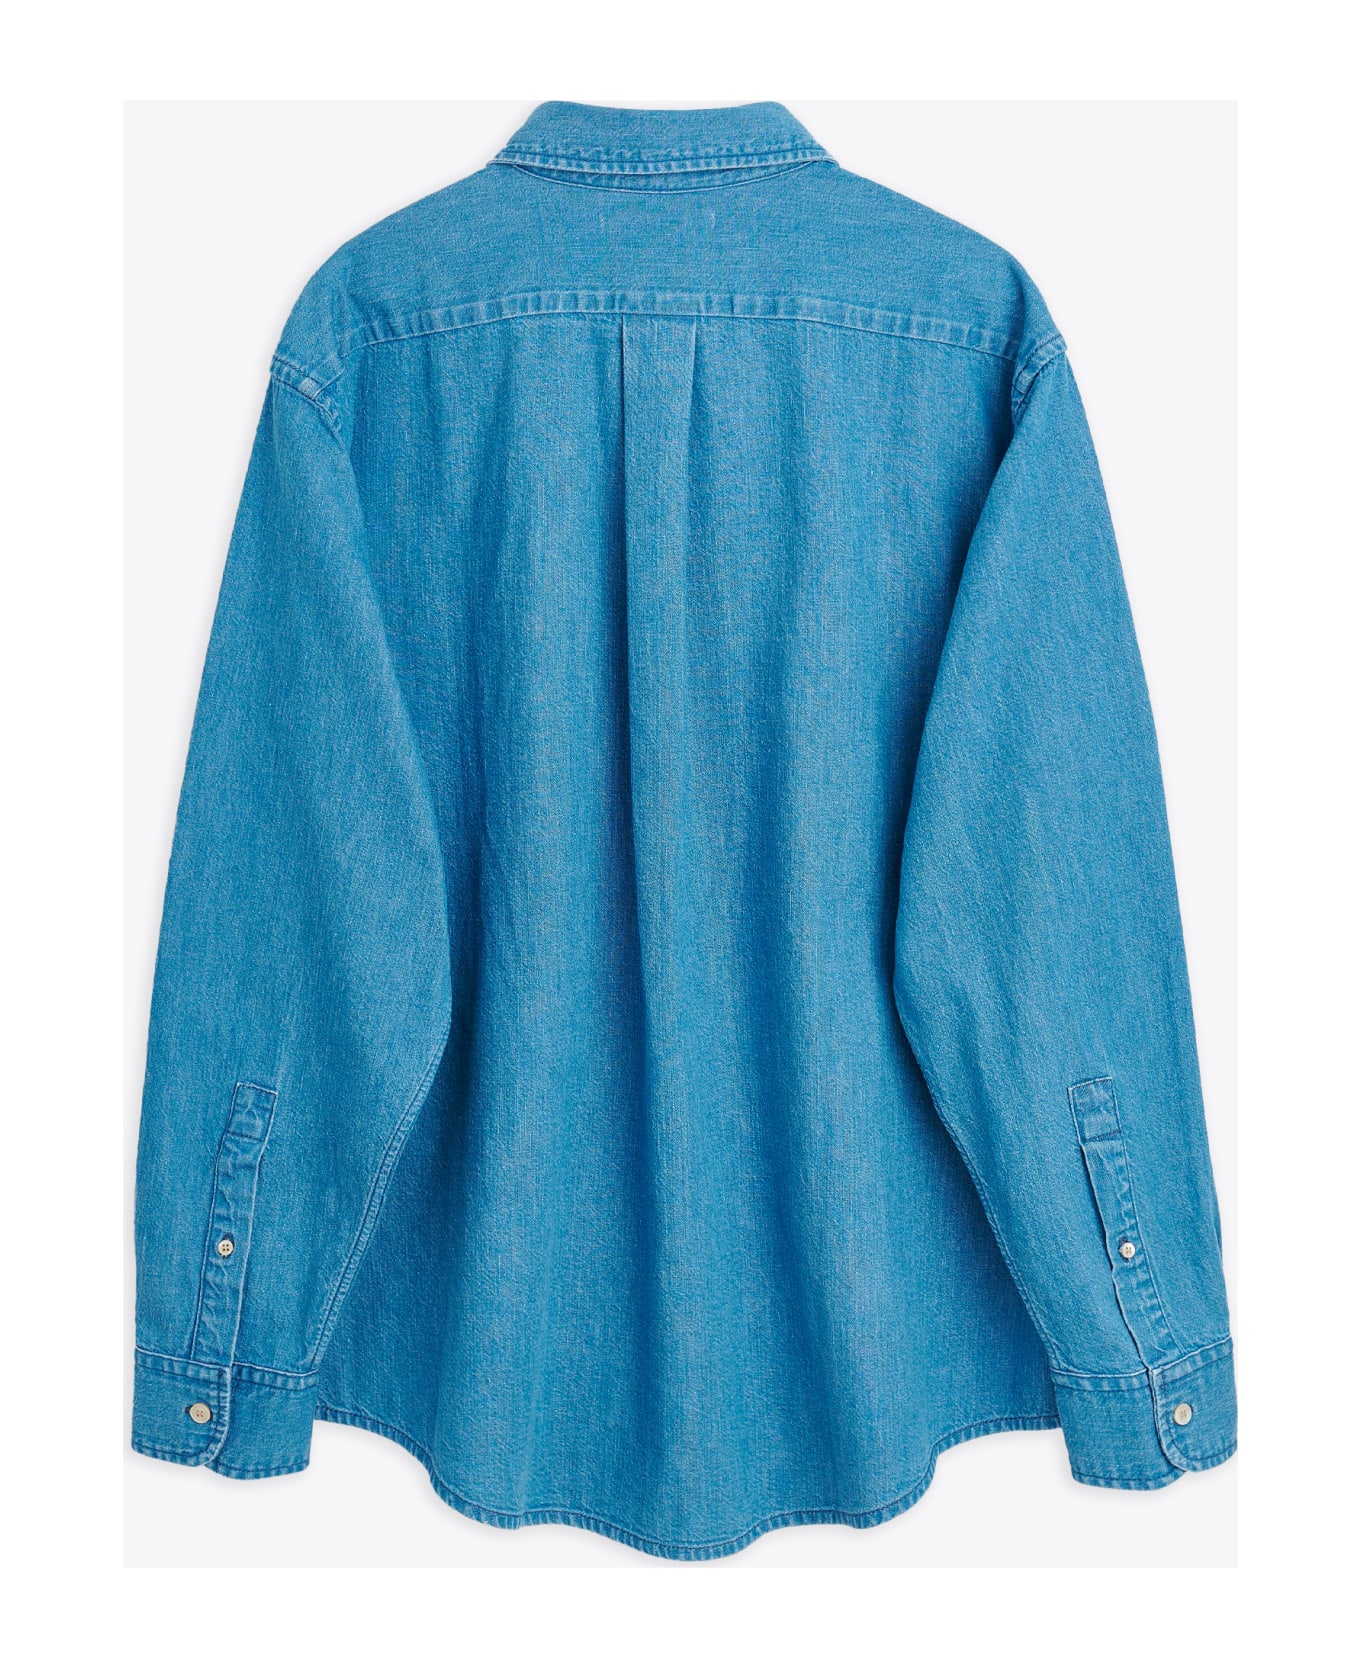 Sunflower #1189 Mid blue chambray denim shirt with long sleeves - Denim Button Down Shirt - Denim blu シャツ